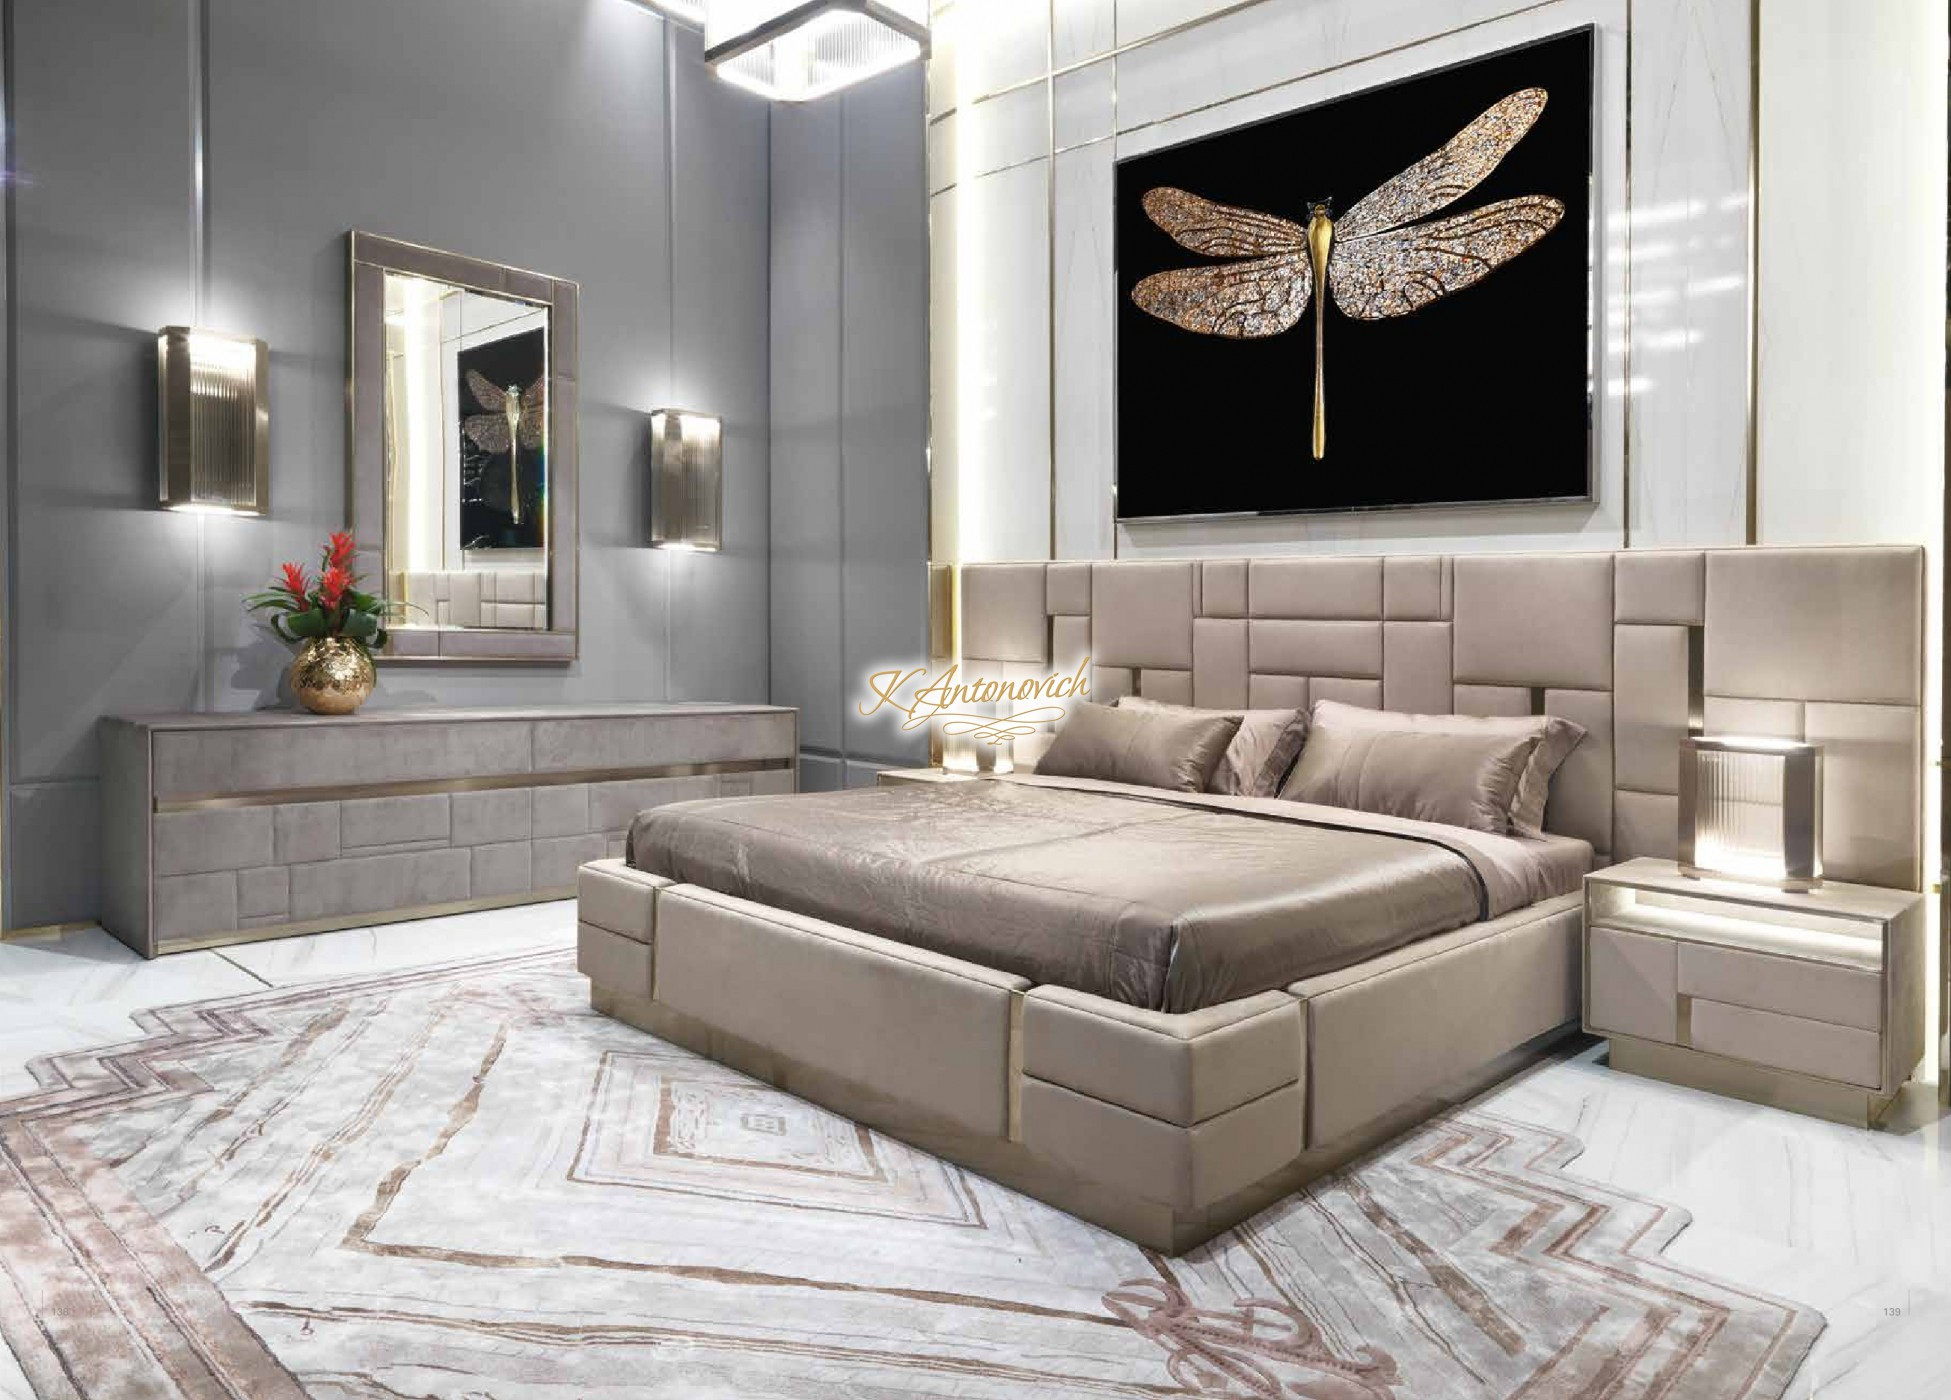 Modern Luxury Bedroom Furniture
 10 Luxury Bedroom Ideas Stunning Luxury Beds in Glamorous